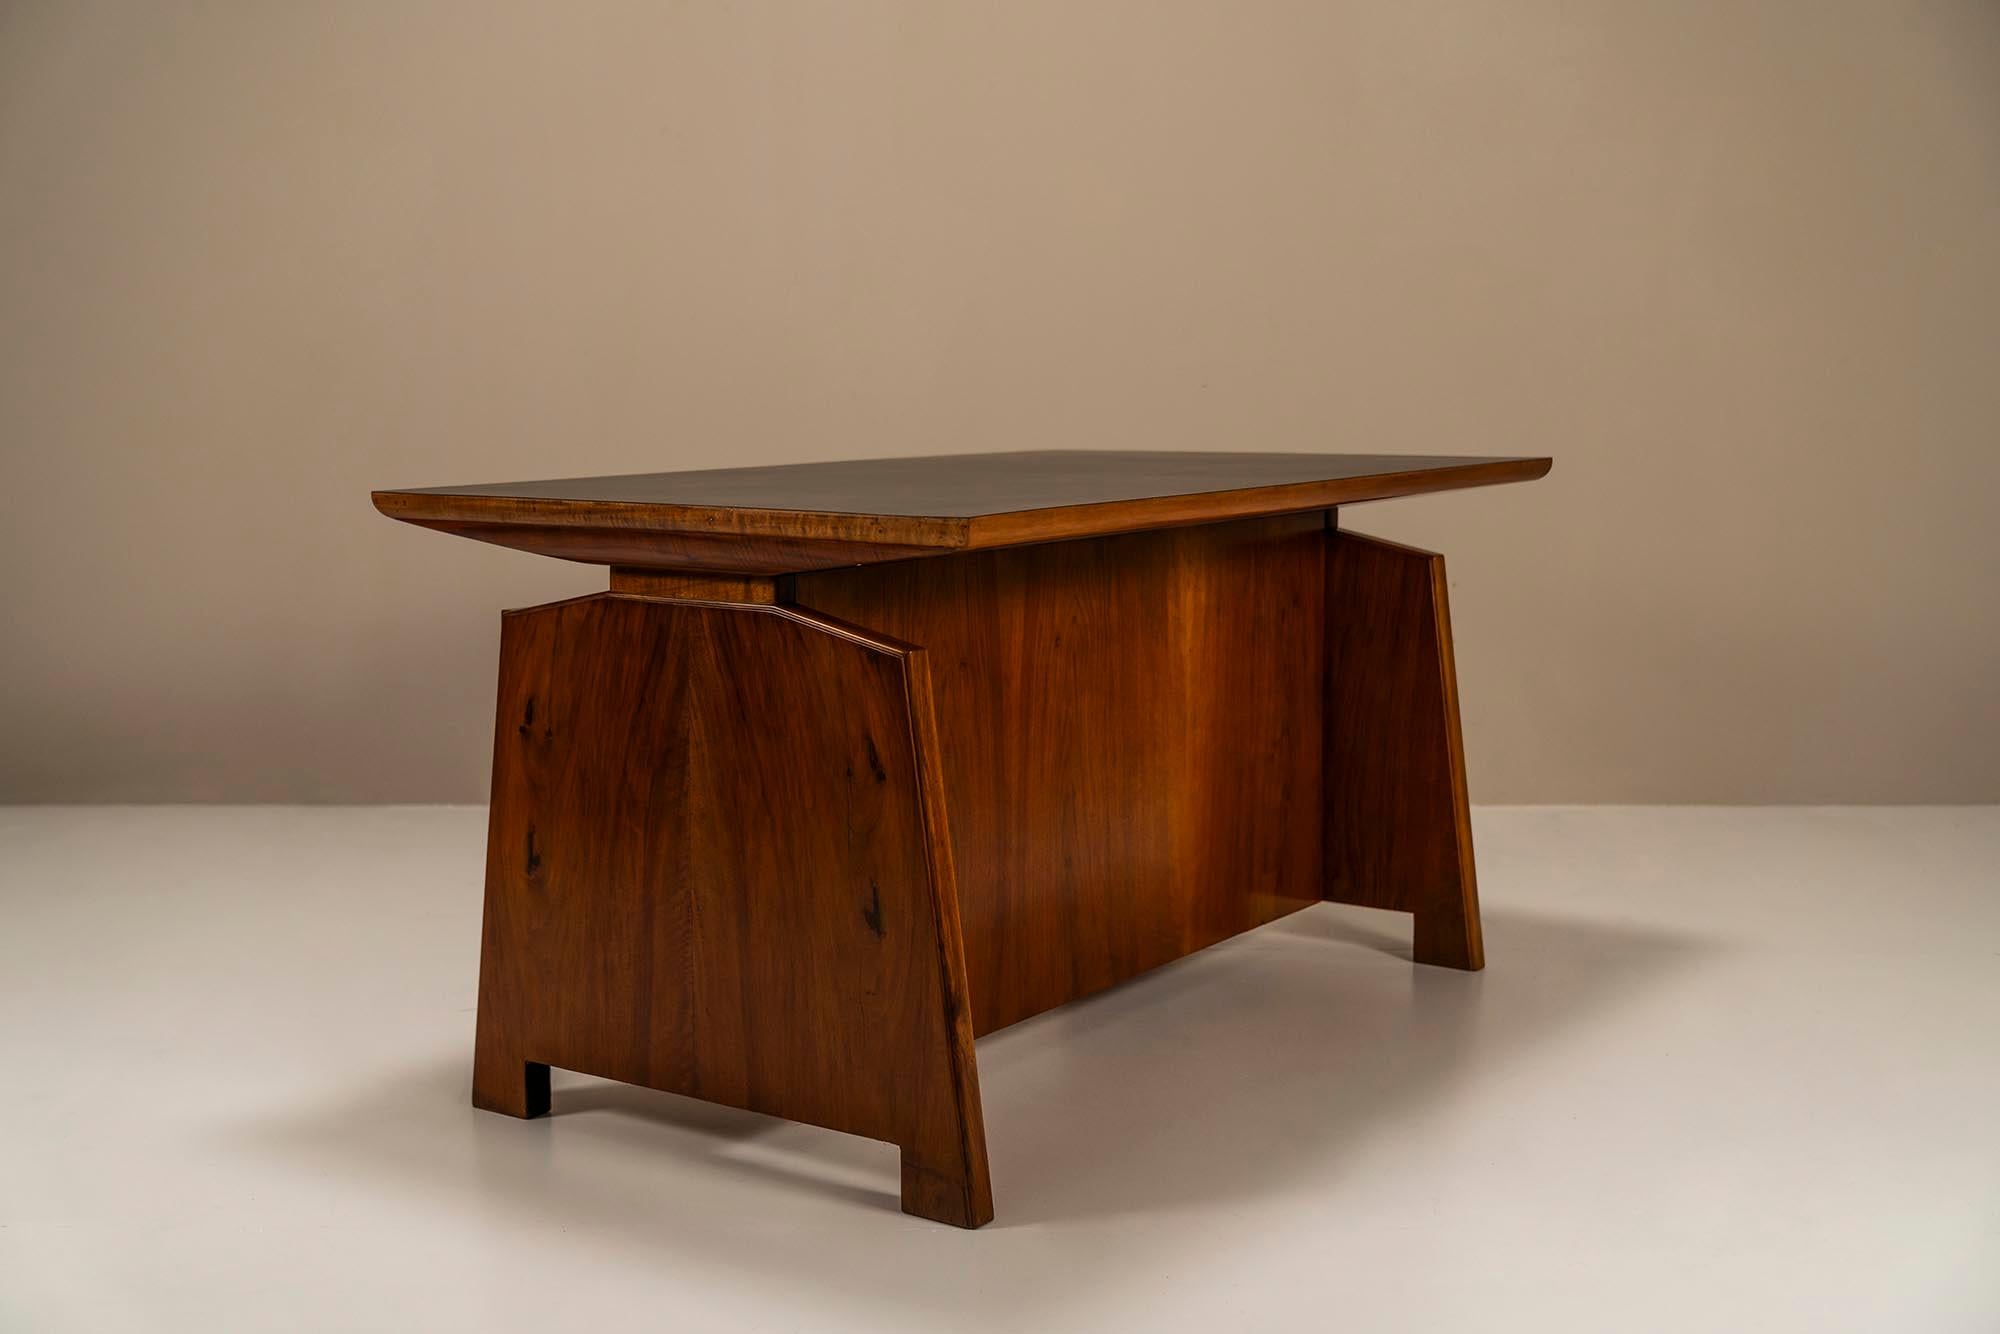 Mid-20th Century Architectural Desk In Walnut By Carlo de Carli, Italy 1950's For Sale